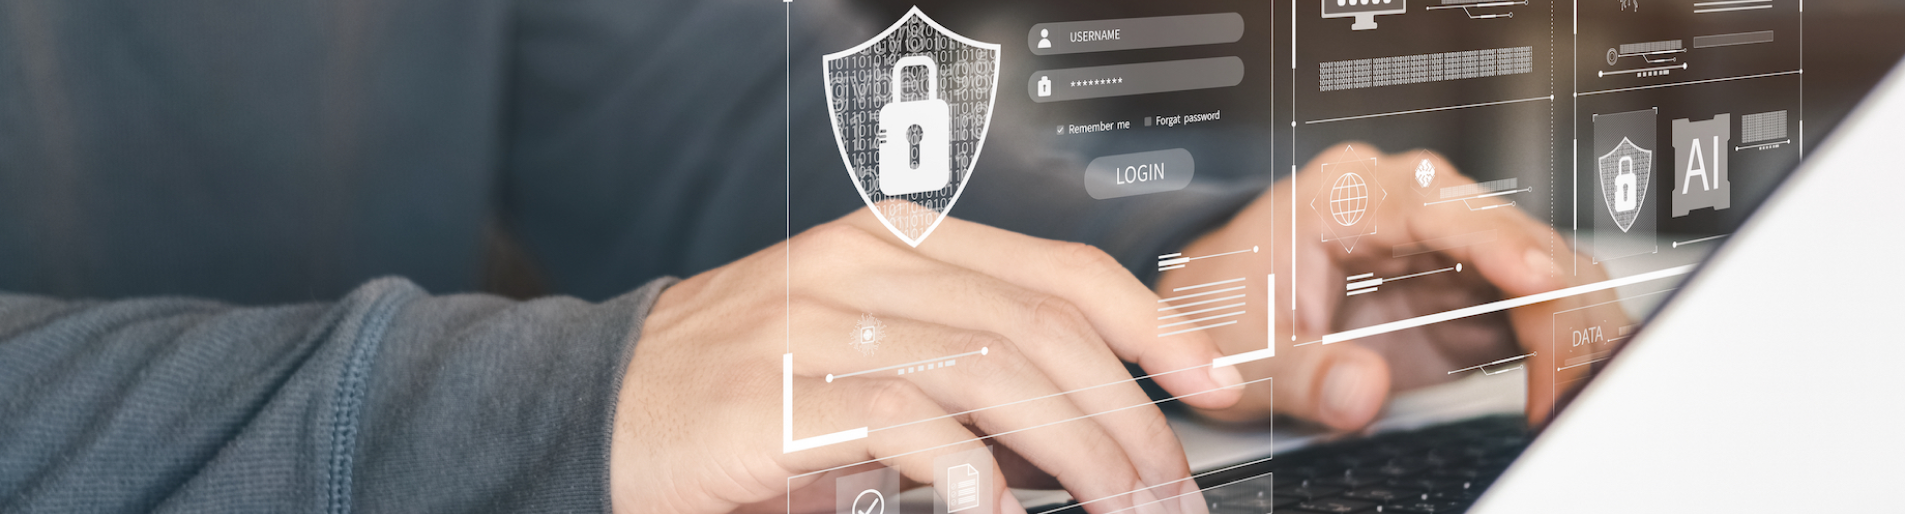 digital identity theft protection